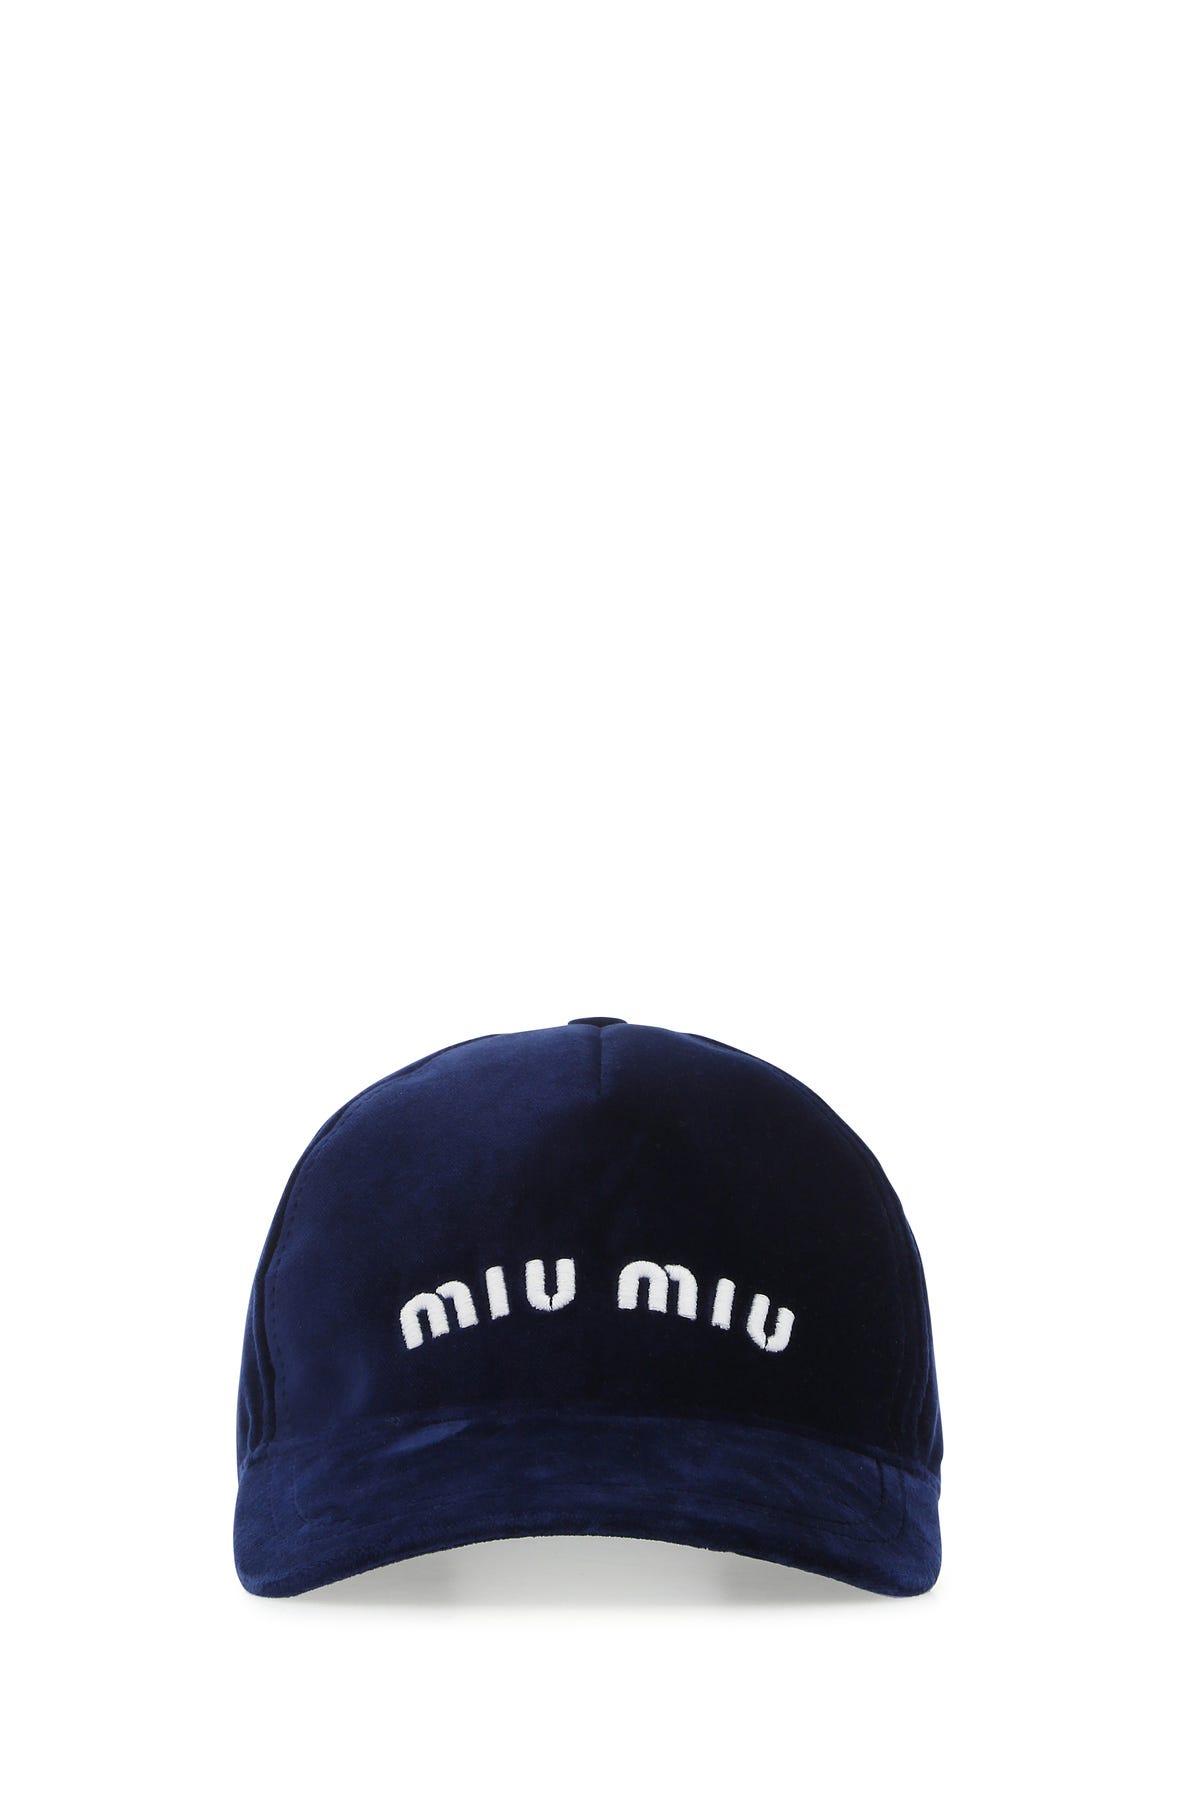 Miu Miu Velvet Baseball Cap in Blue | Lyst